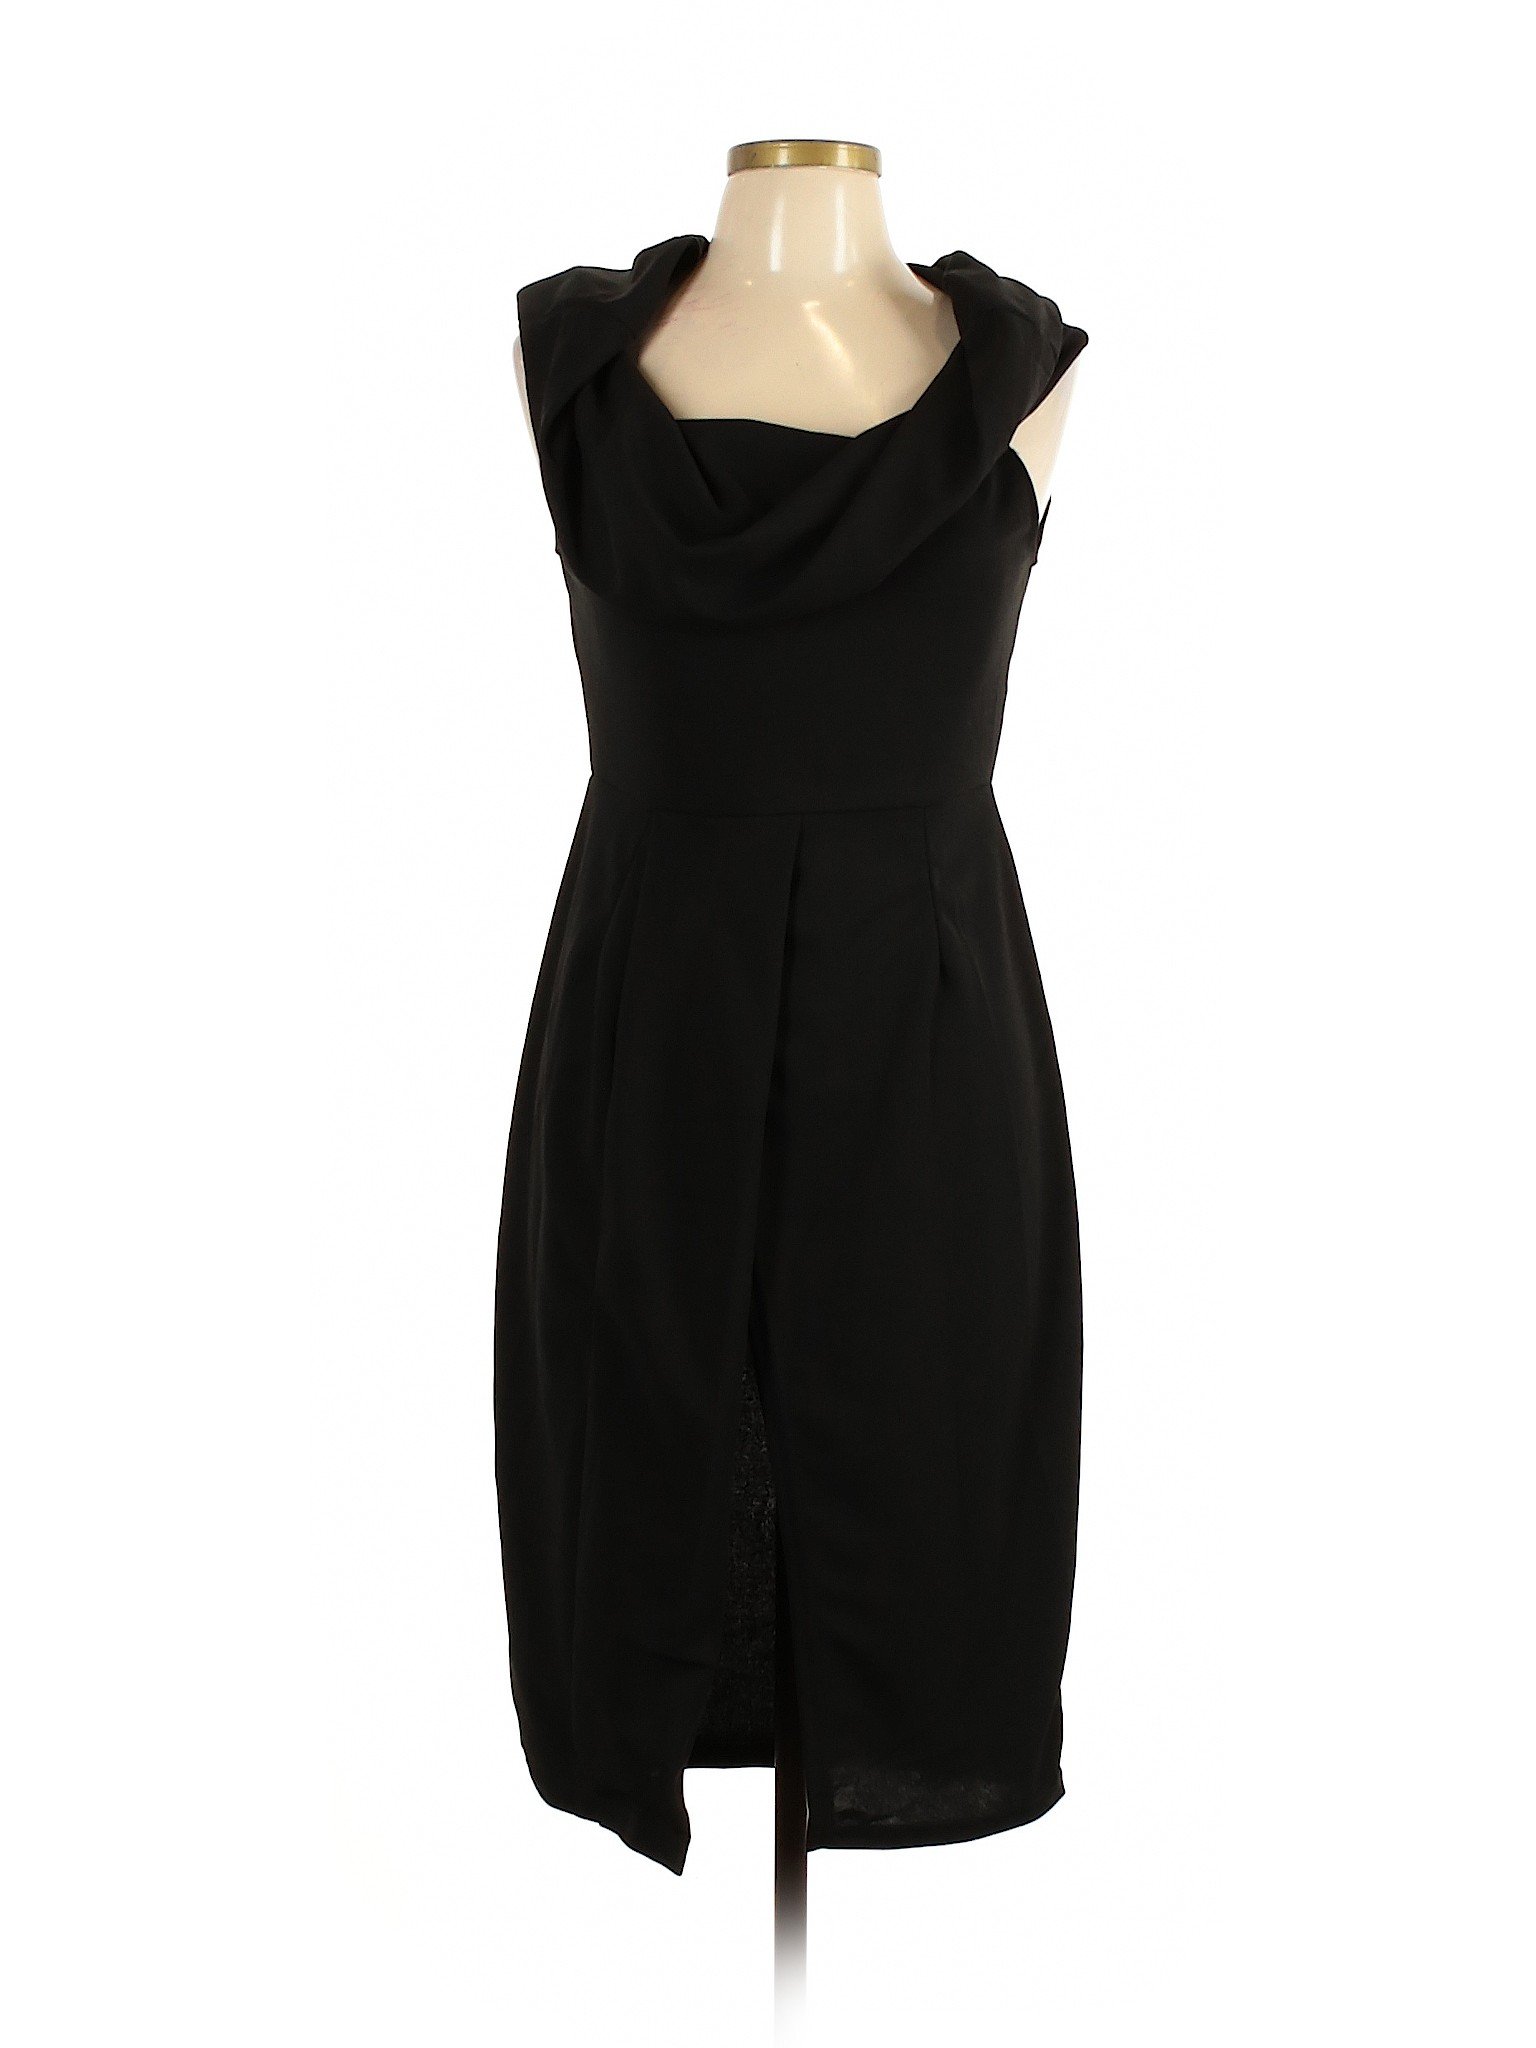 NWT CBR Women Black Cocktail Dress L | eBay